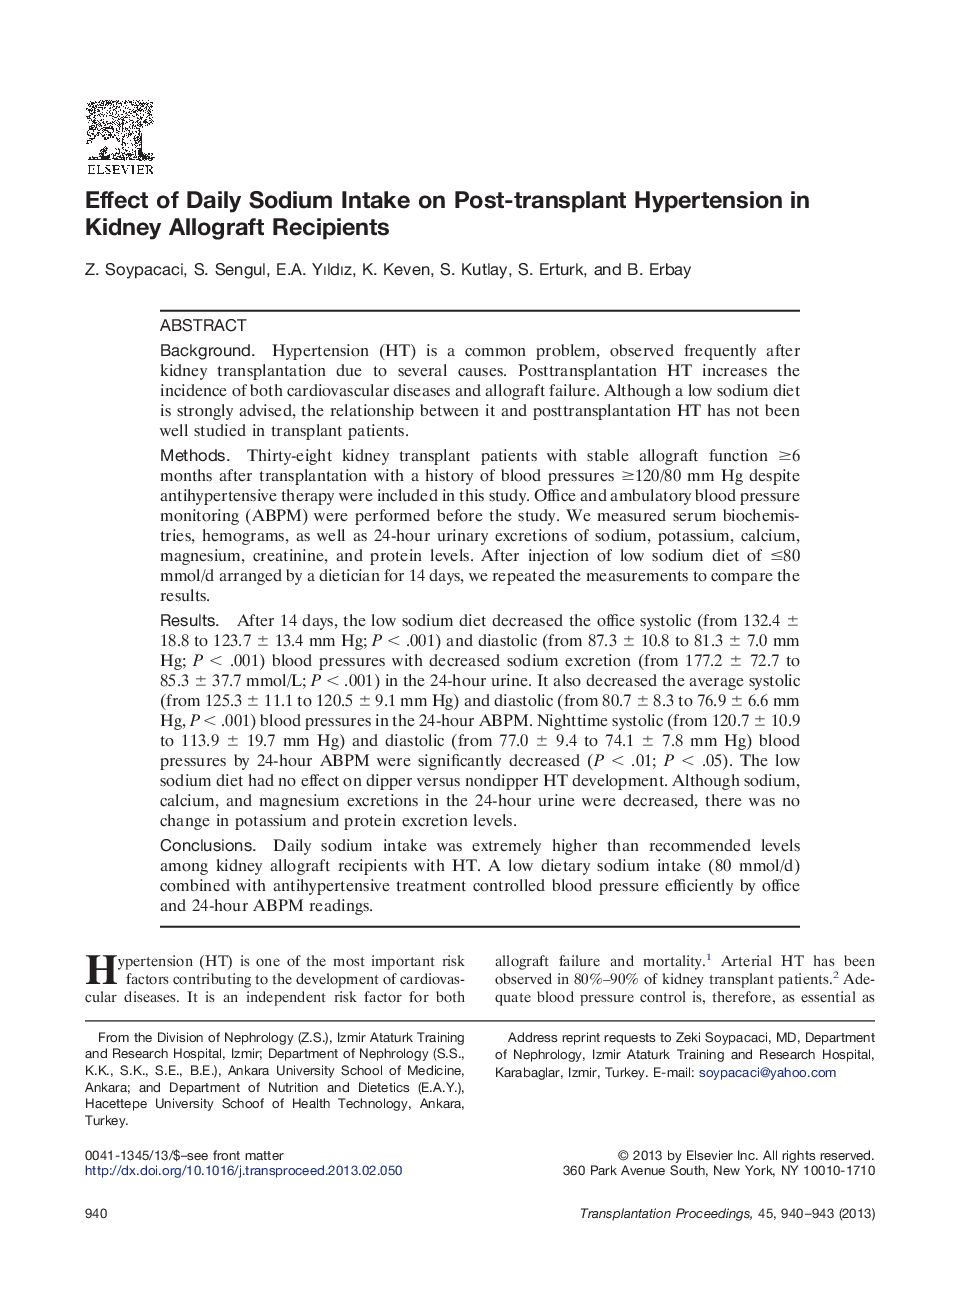 Renal transplantationComplicationsEffect of Daily Sodium Intake on Post-transplant Hypertension in Kidney Allograft Recipients